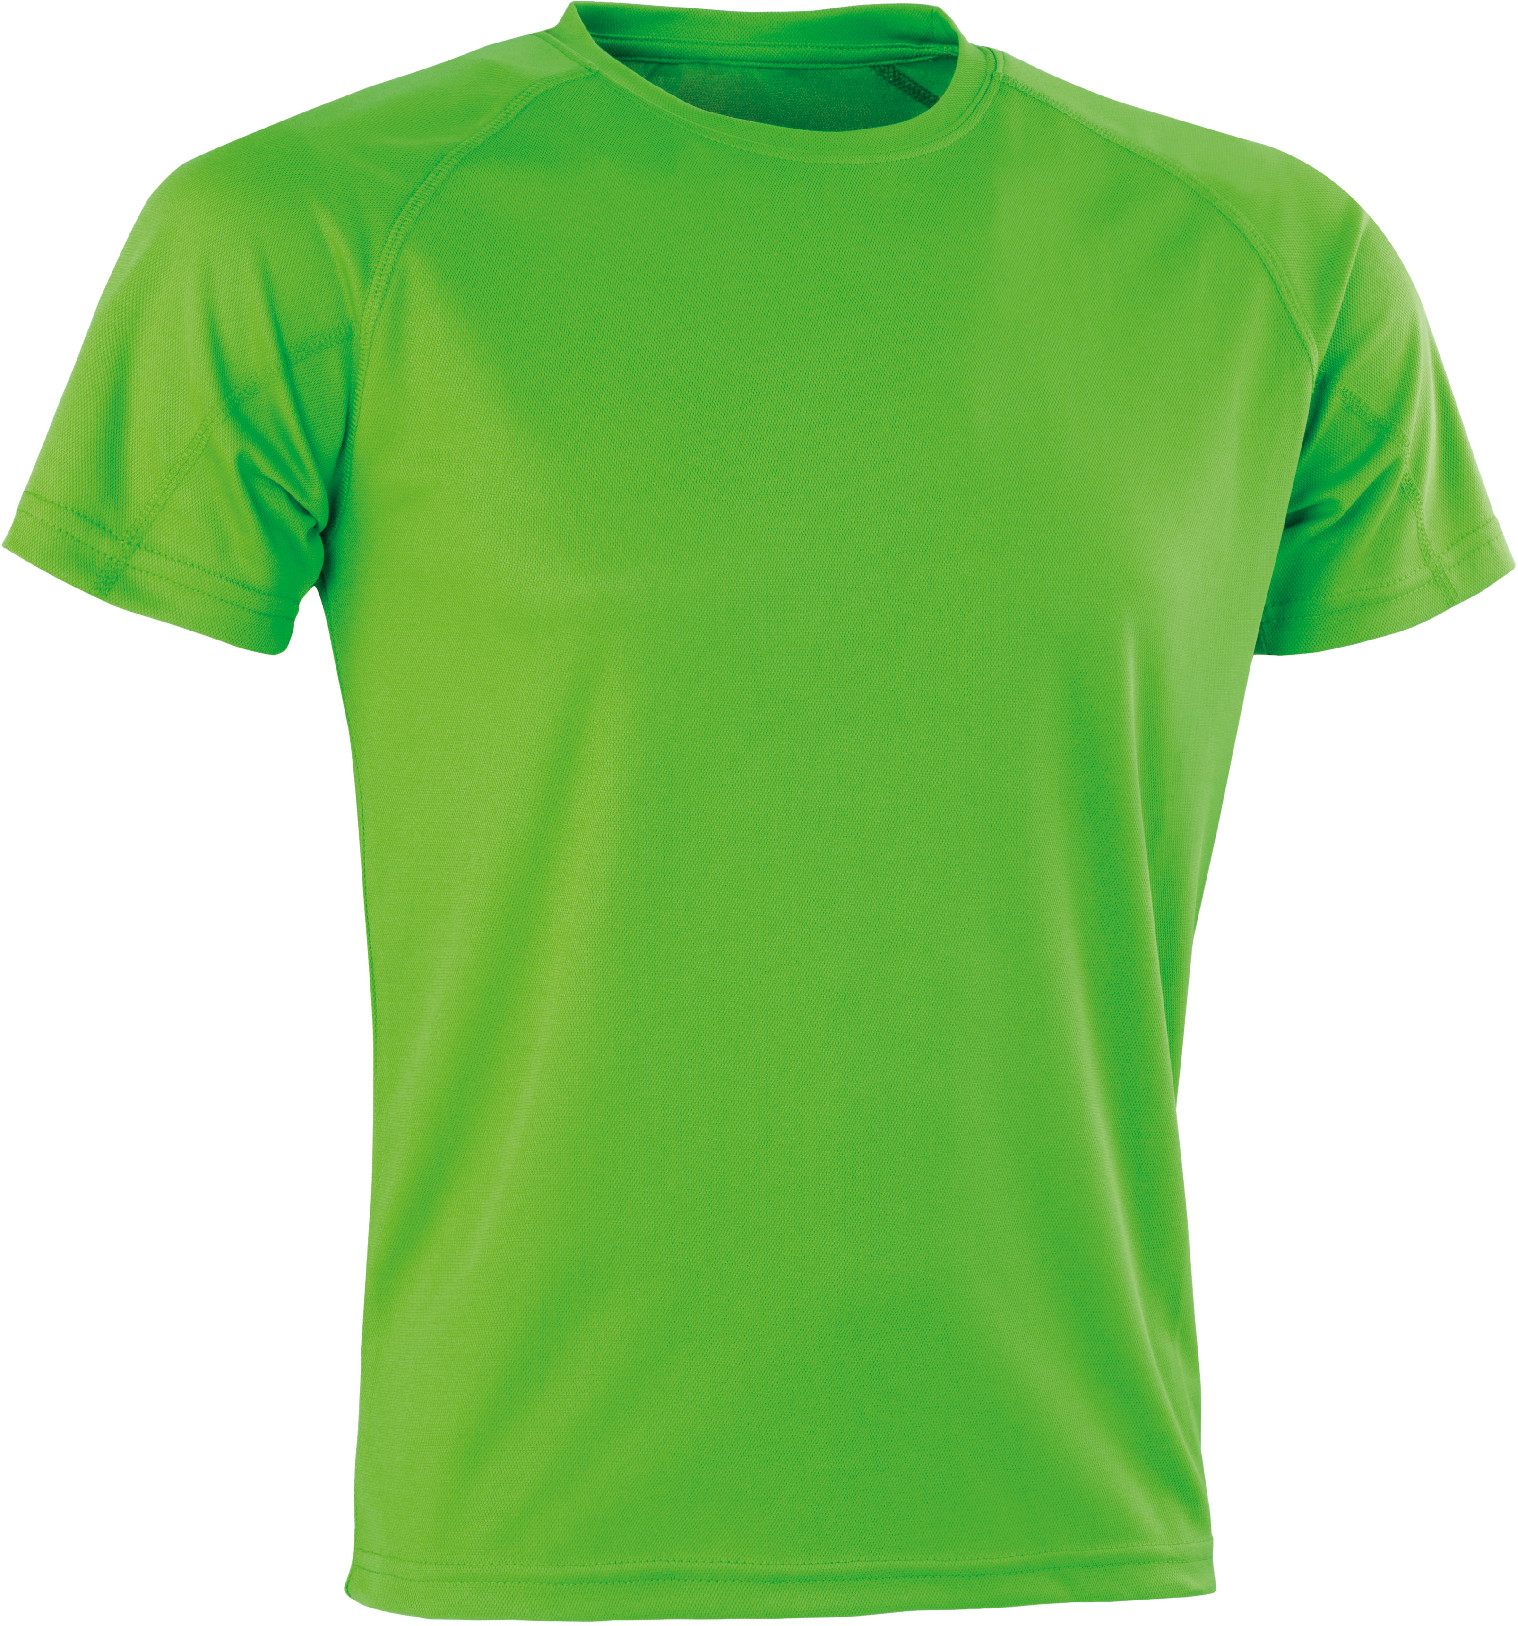 Sportovní tričko Aircool S287X Barva: limetková, Velikost: S